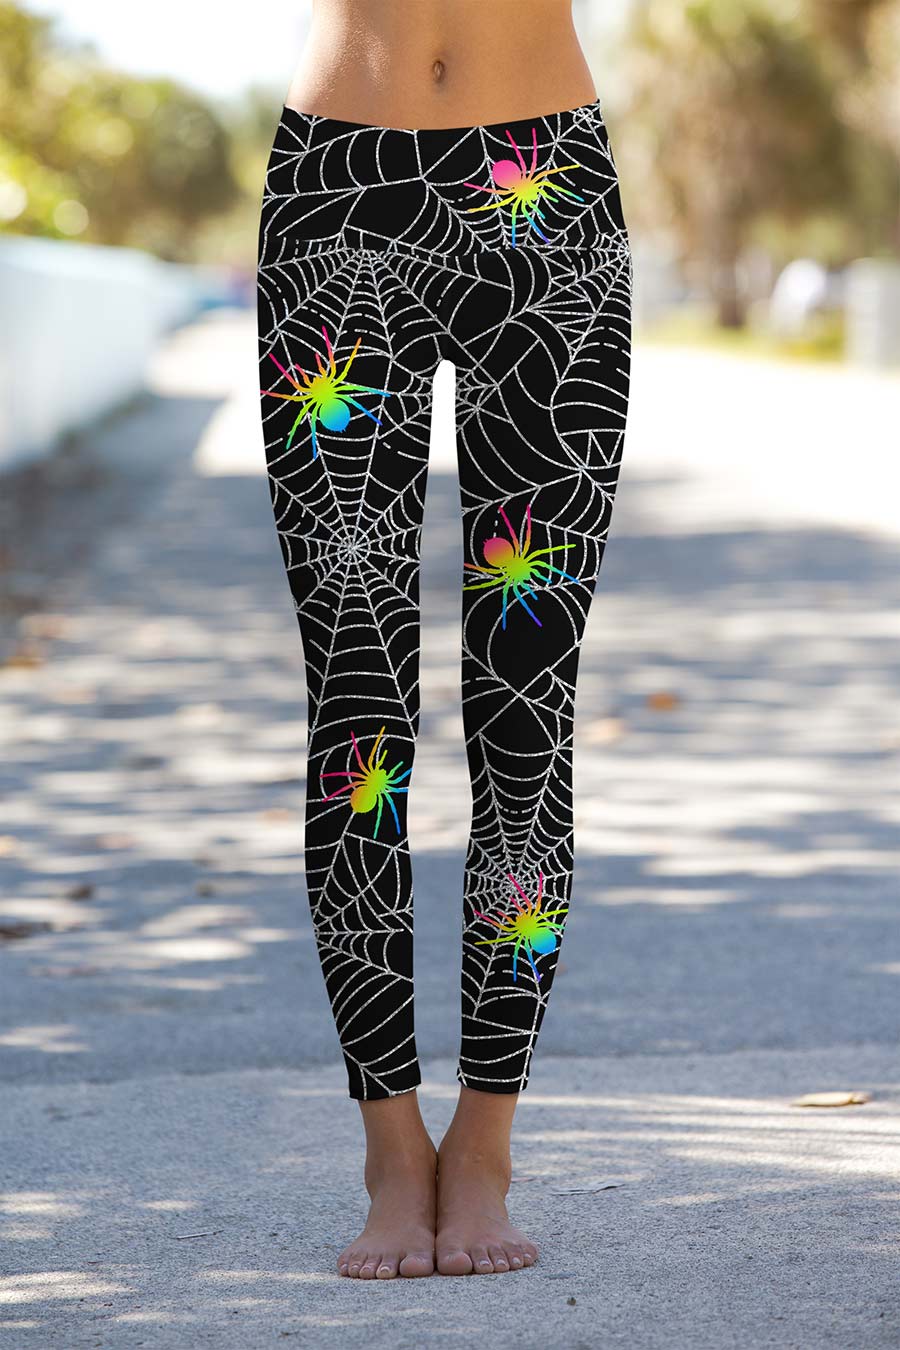 Chichi Lucy Black & Gold Glitter Print Leggings Yoga Pants